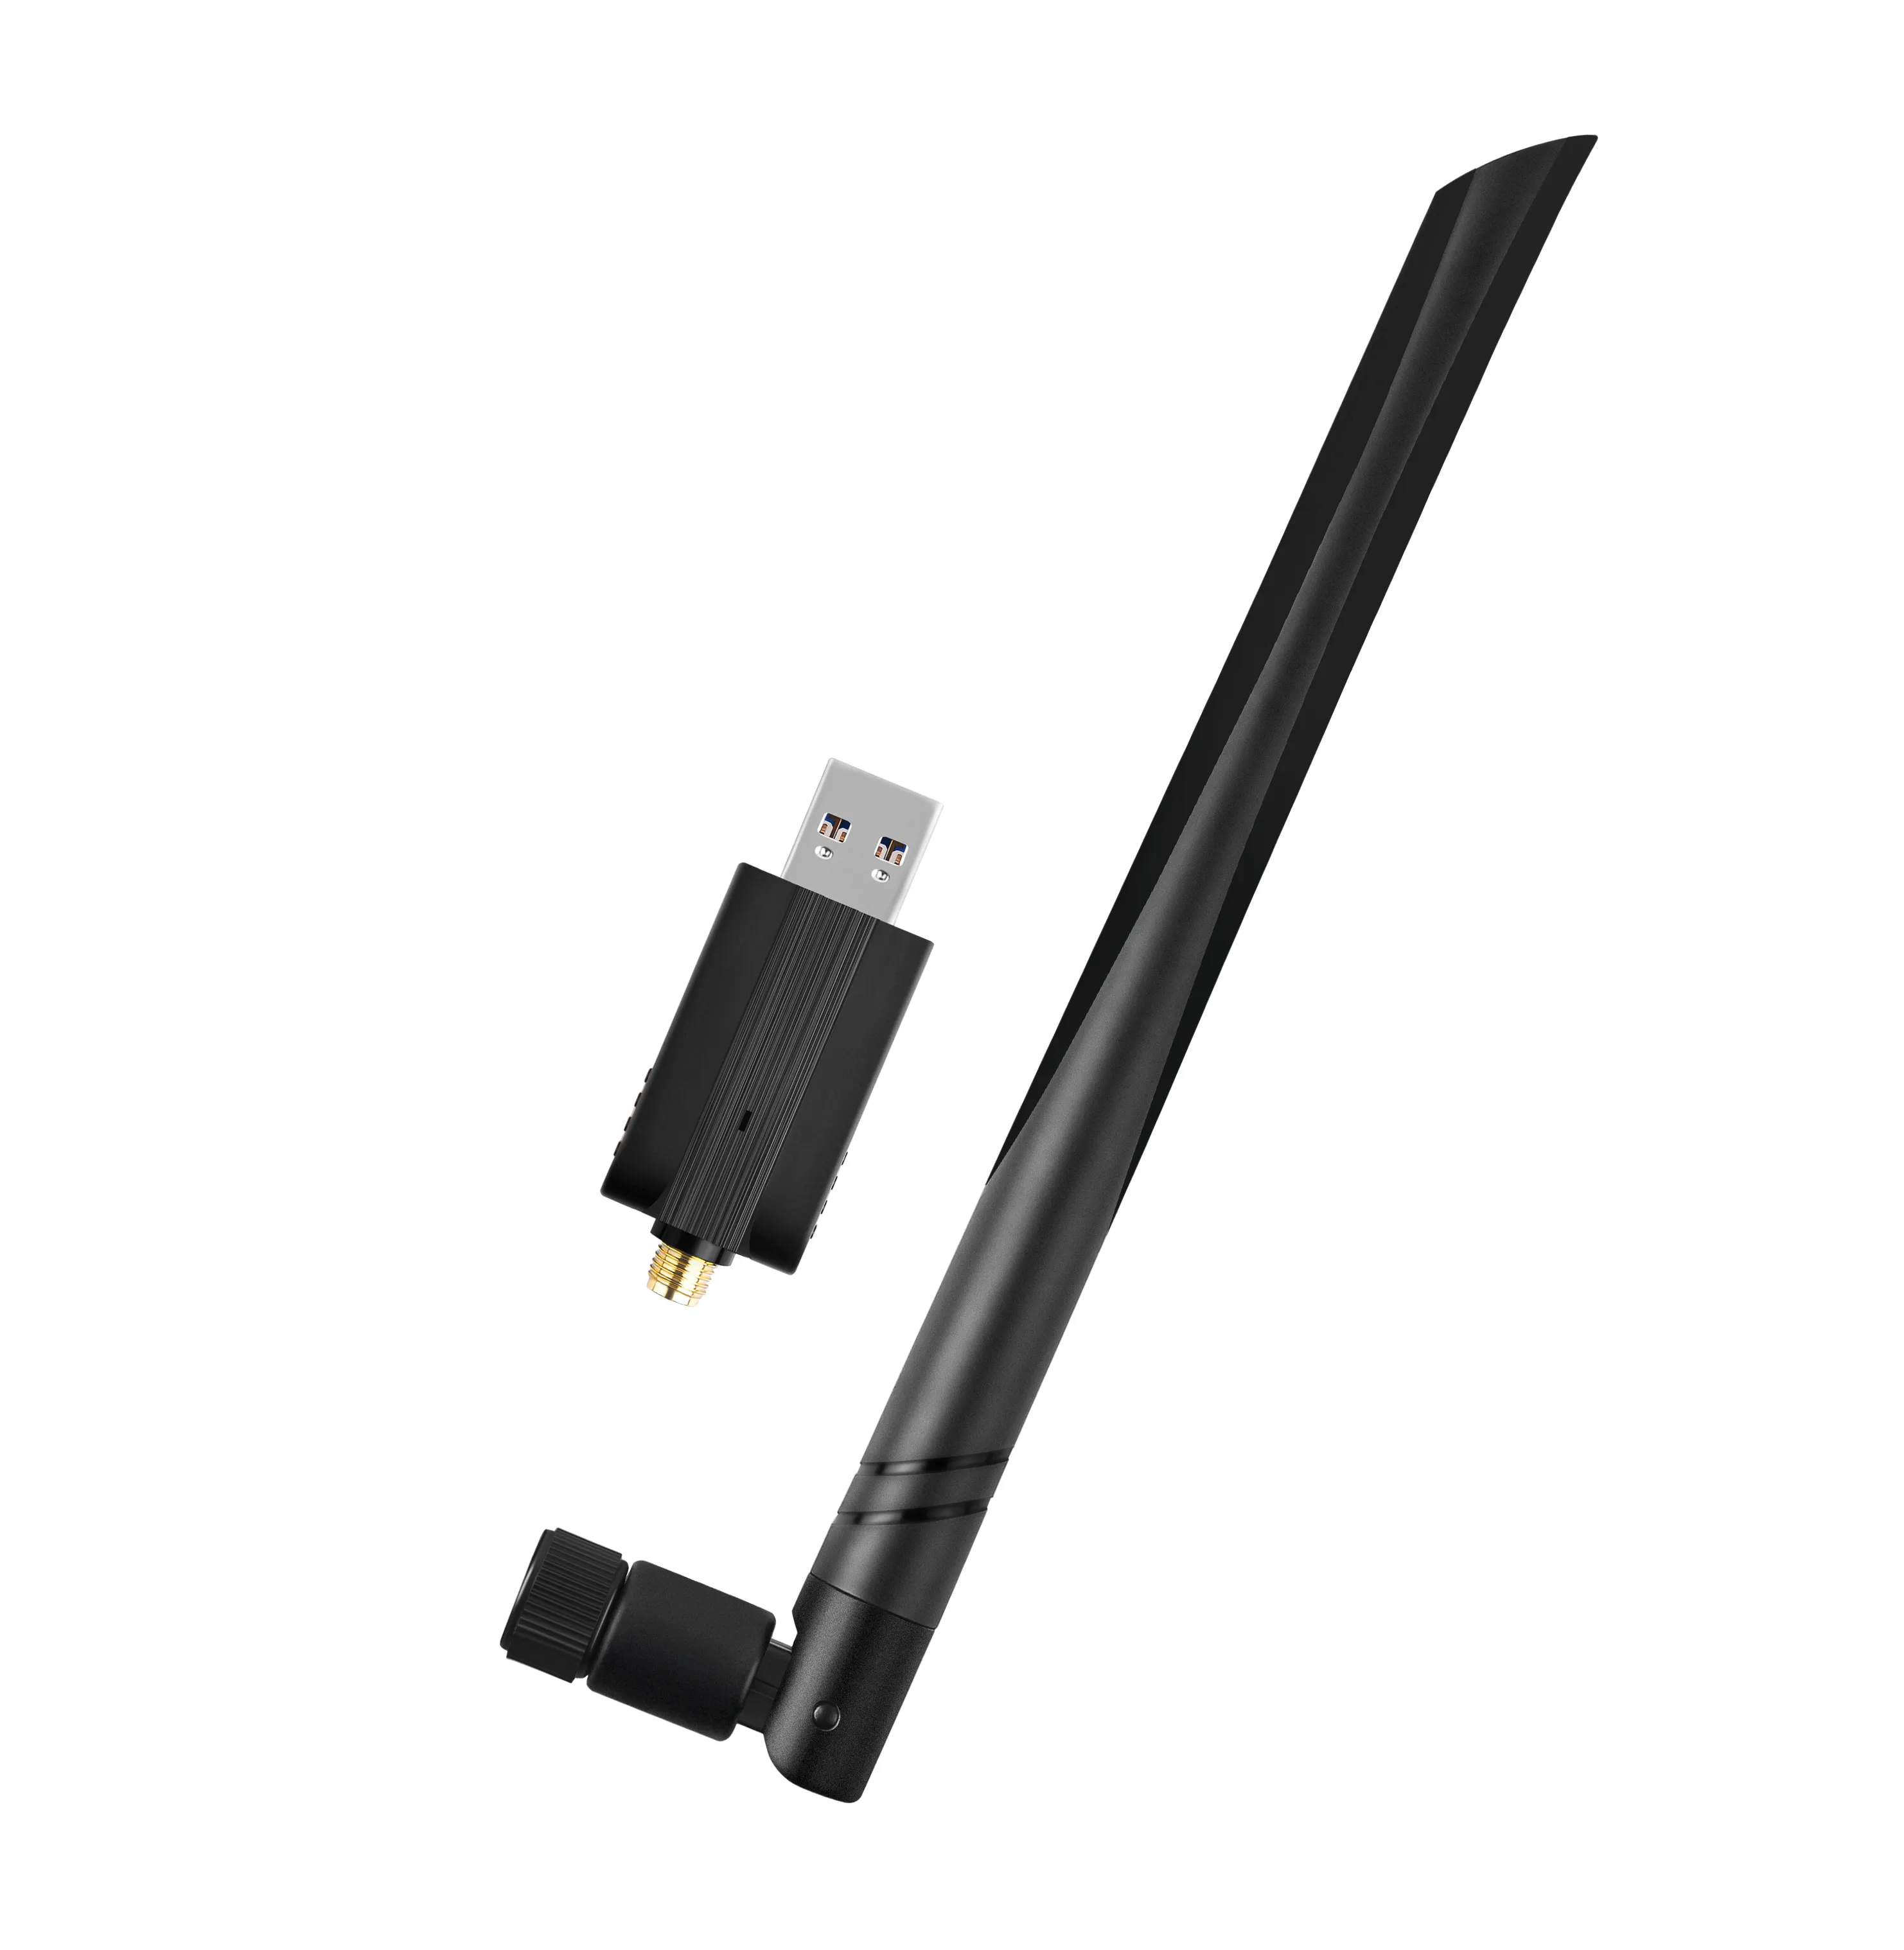 Wireless Network Card Adapter 1200M 3.0 USB WIFI Receiver 2.4G/5G Dual Band Adapter 802.11.n External Antenna for Desktop Laptop